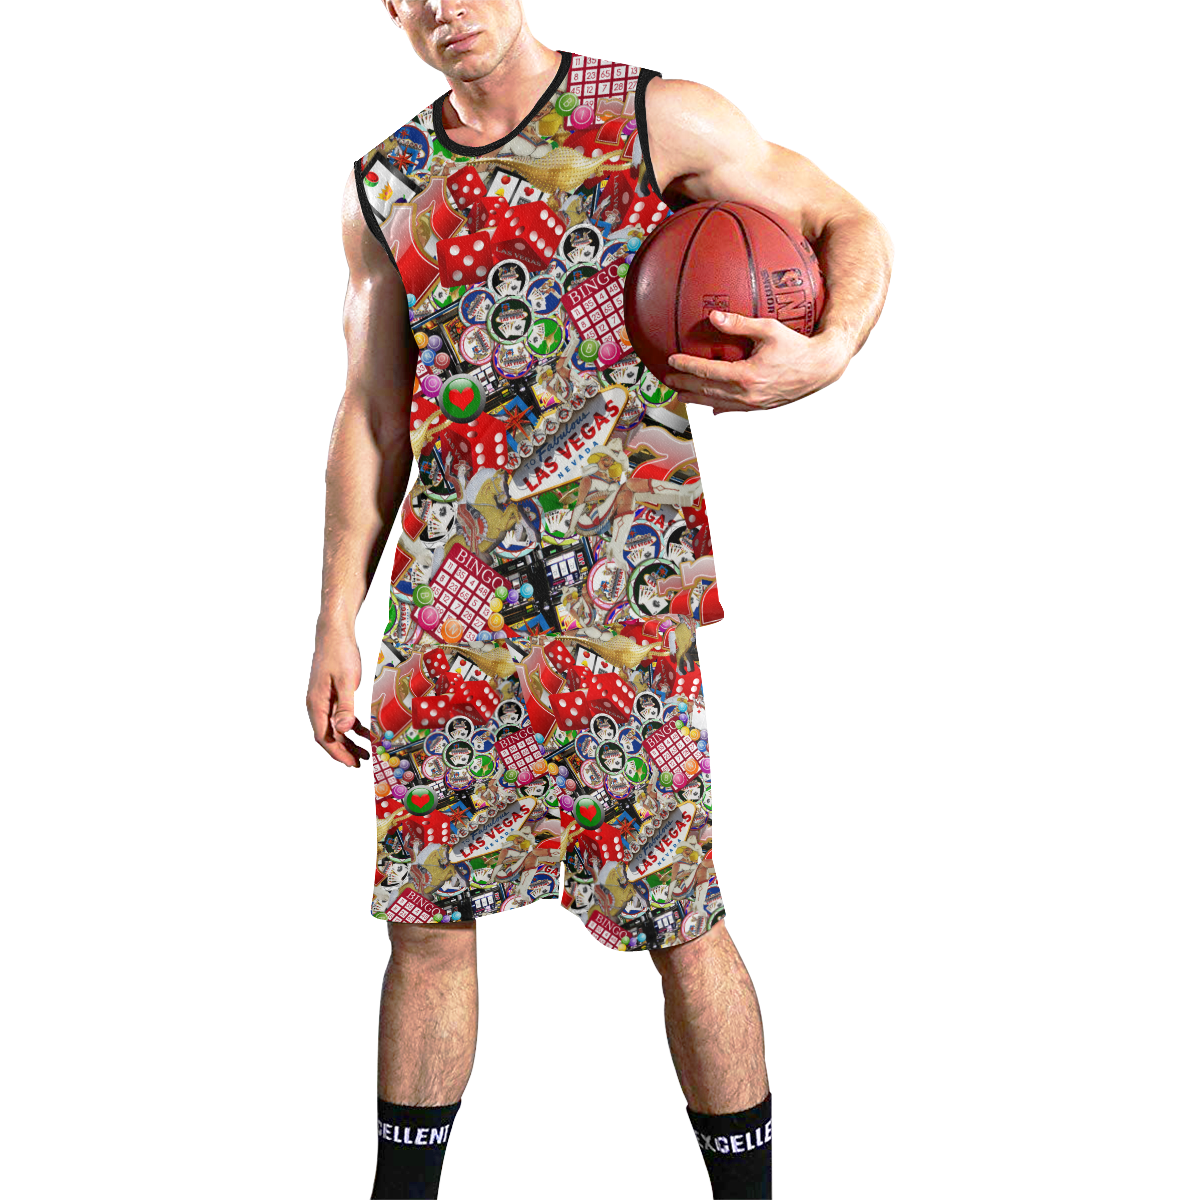 Gamblers Delight - Las Vegas Icons All Over Print Basketball Uniform